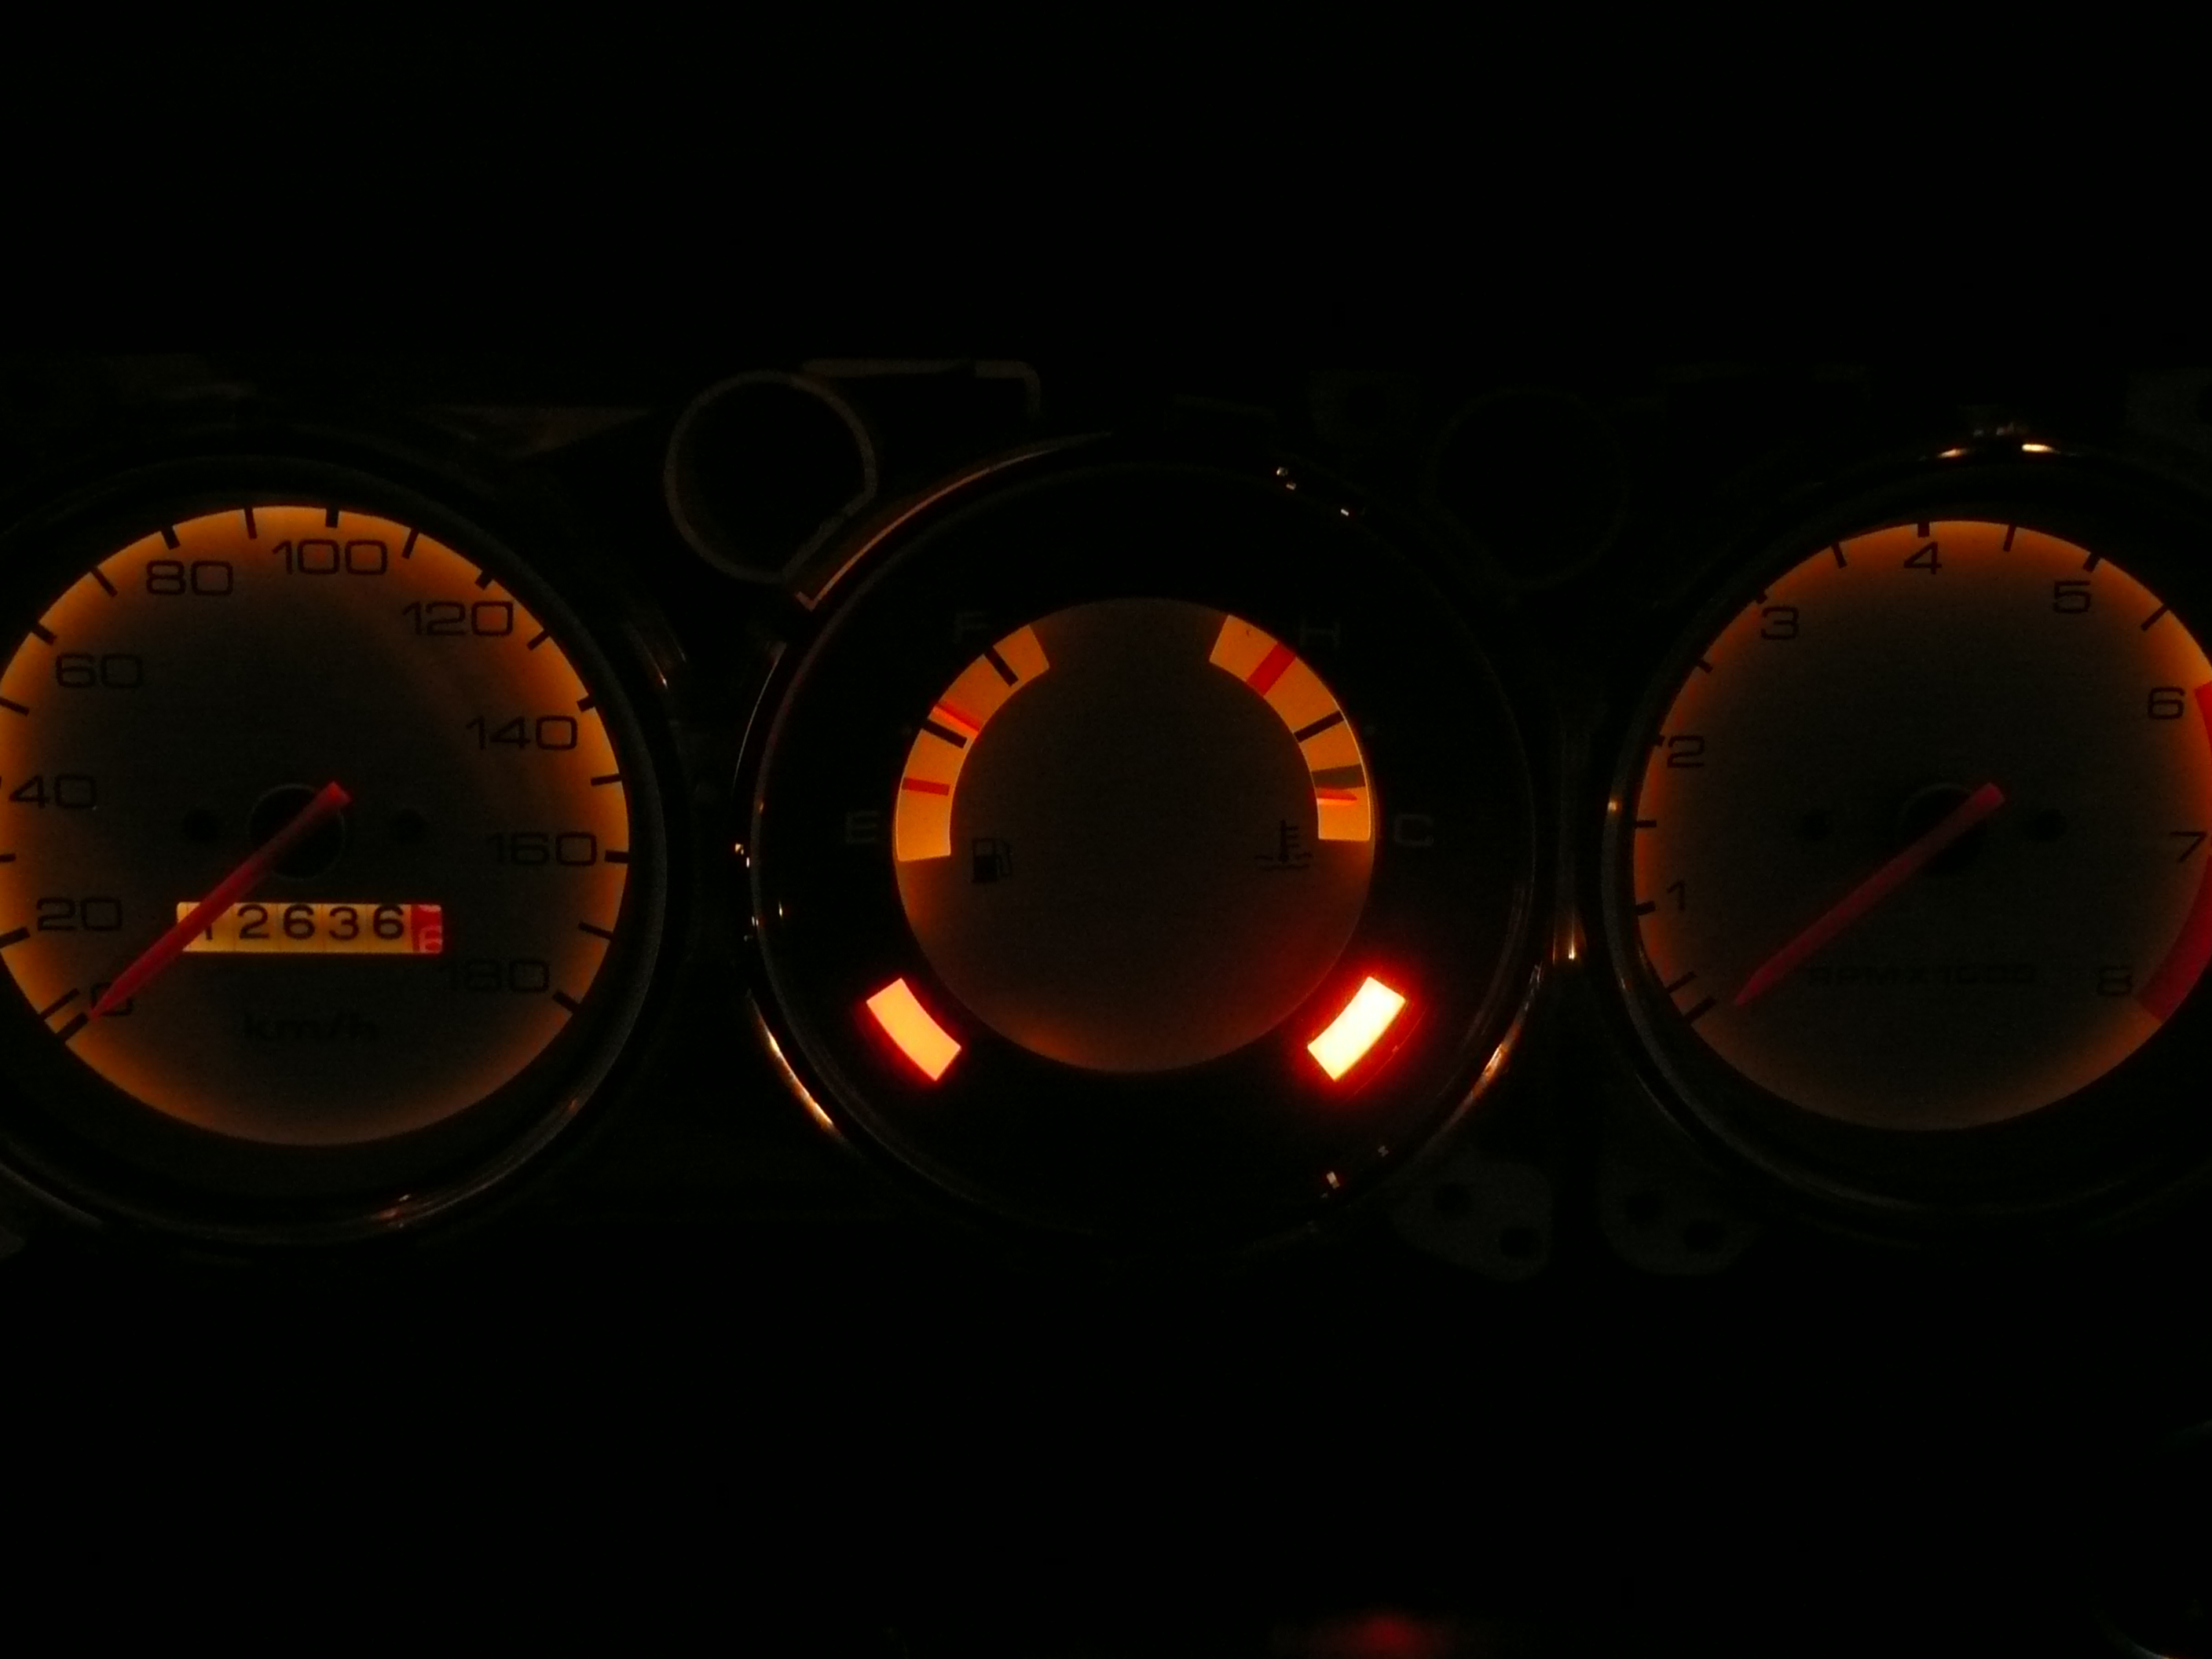 Mini MPI gauges | Flickr - Photo Sharing!